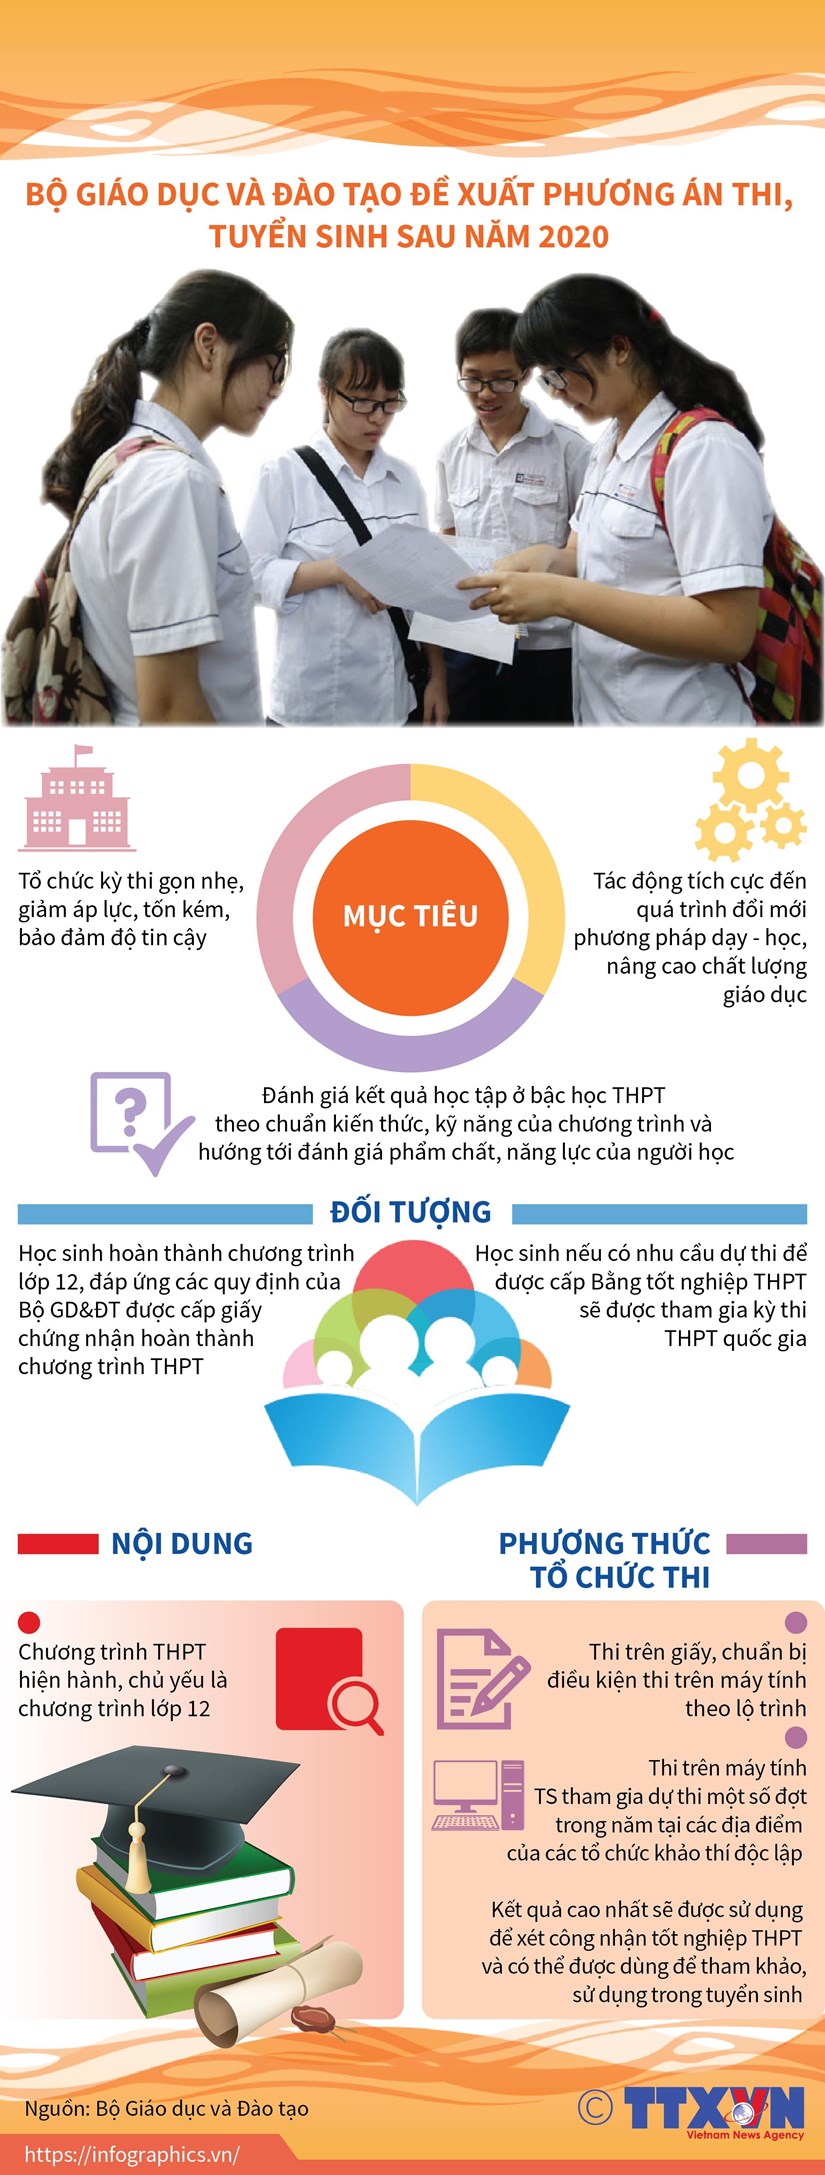 infographics de xuat phuong an thi tuyen sinh sau nam 2020